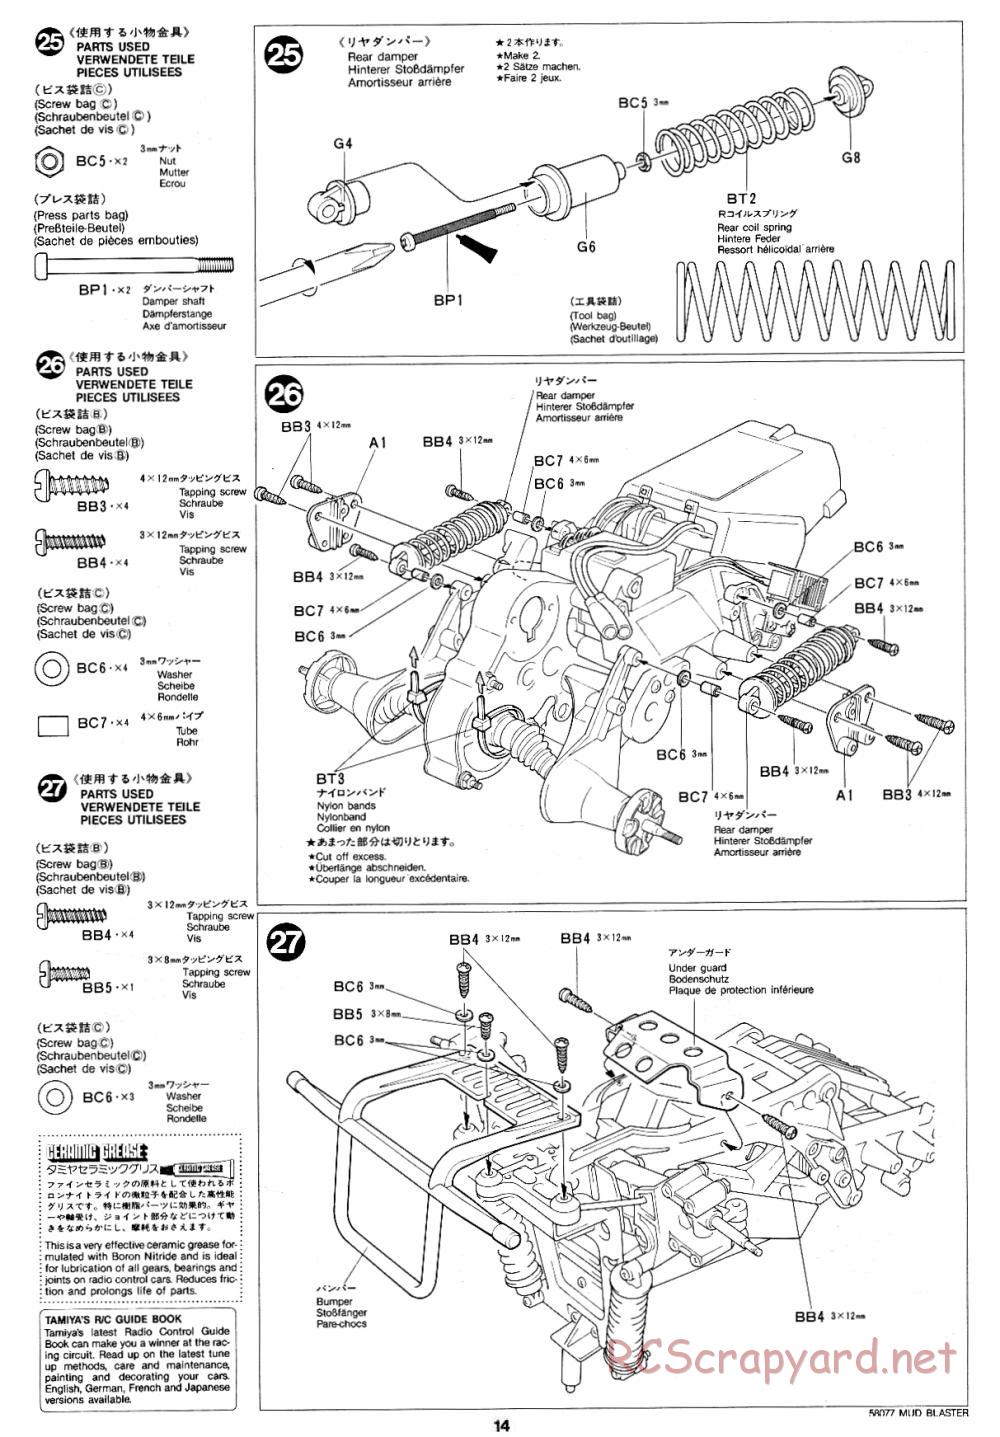 Tamiya - Mud Blaster - 58077 - Manual - Page 14